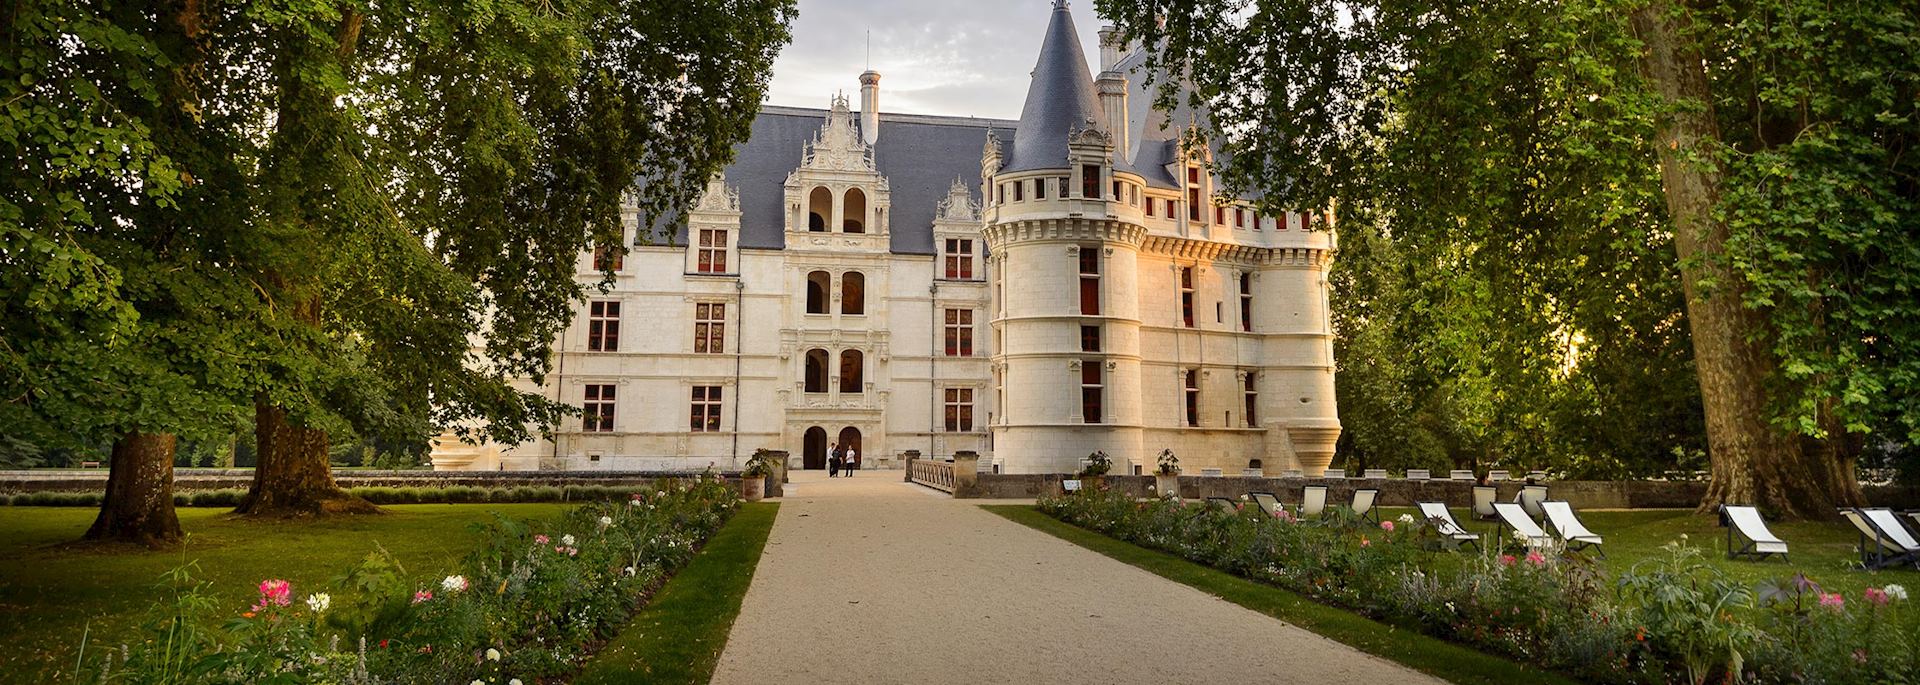 Château d'Azay-le-Rideau, Loire Valley (L+®onard de Serres - CMN)